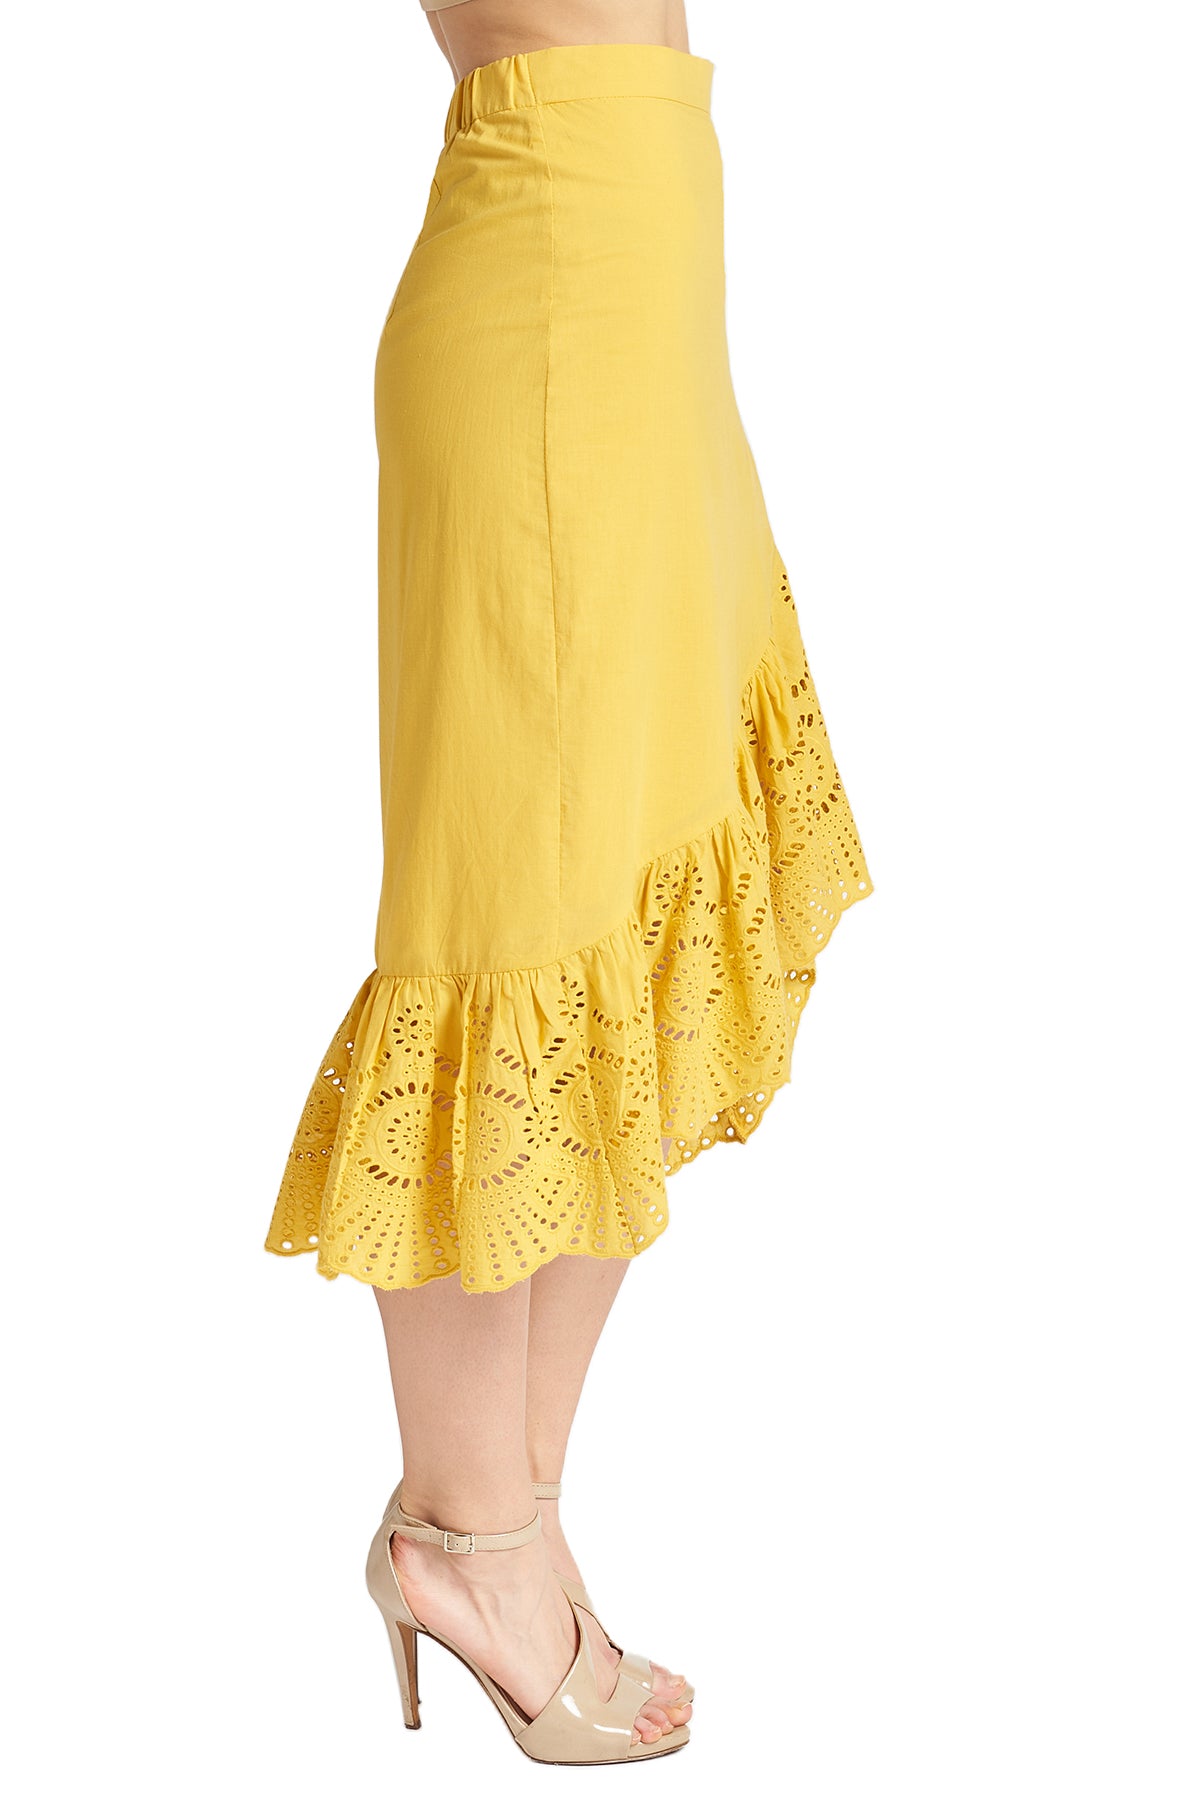 Side view of model wearing yellow cotton eyelet asymmetric ruffle hem skirt.